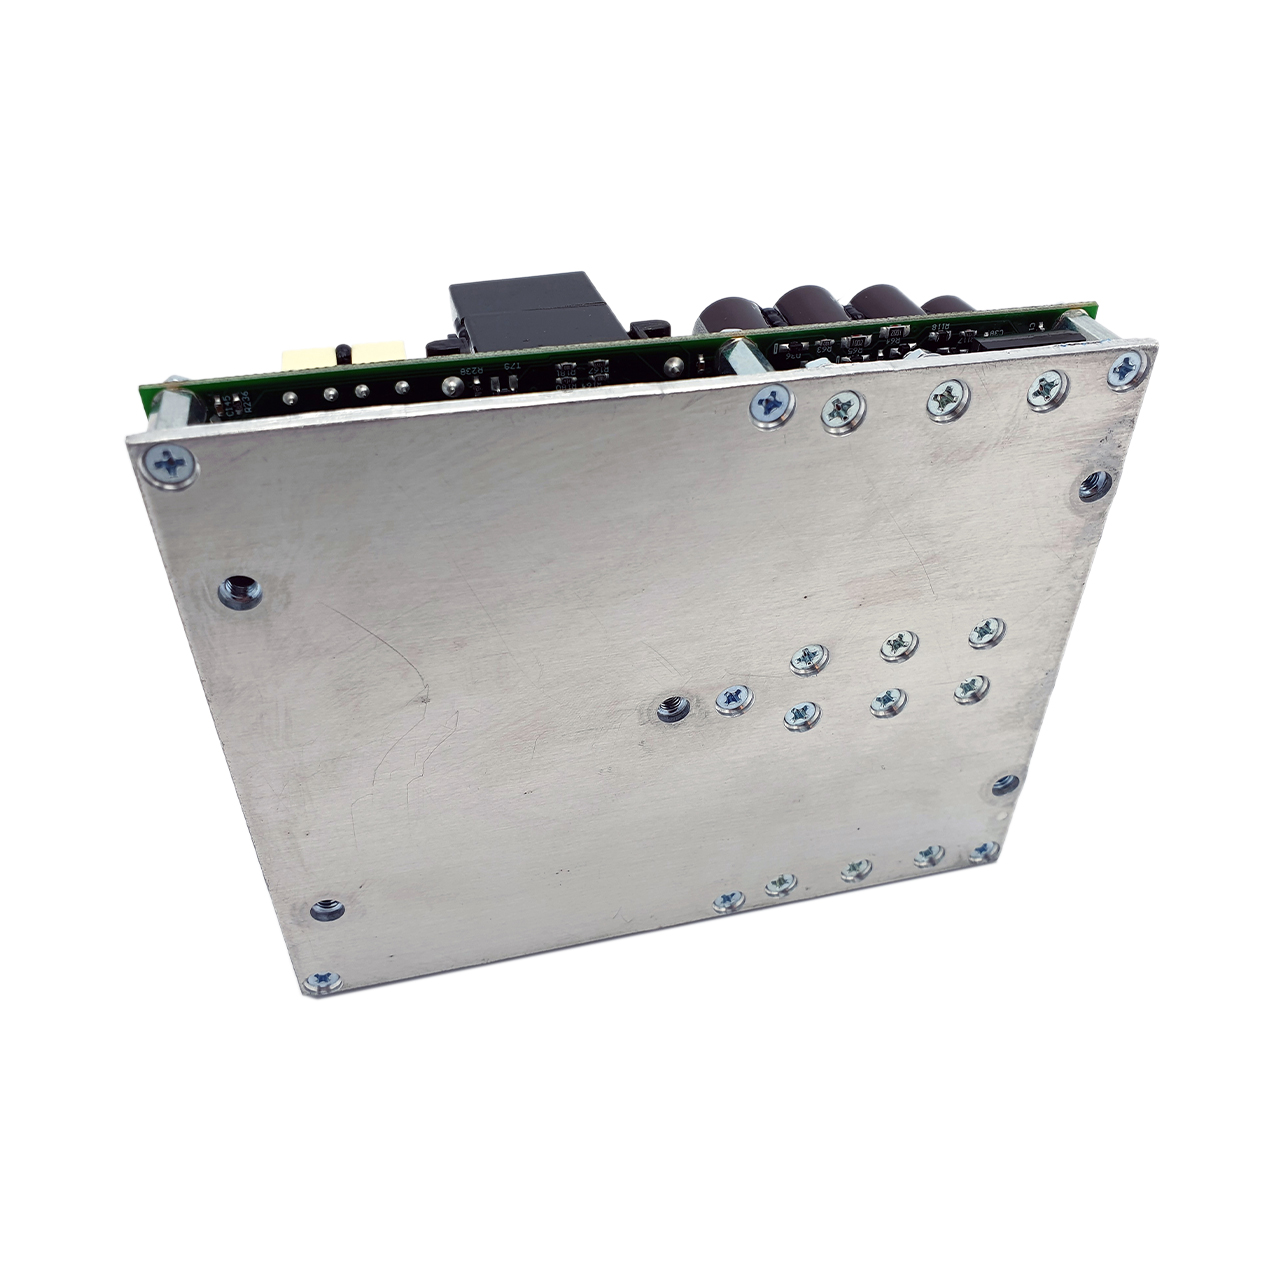 Hypex NC2k amplifier OEM module